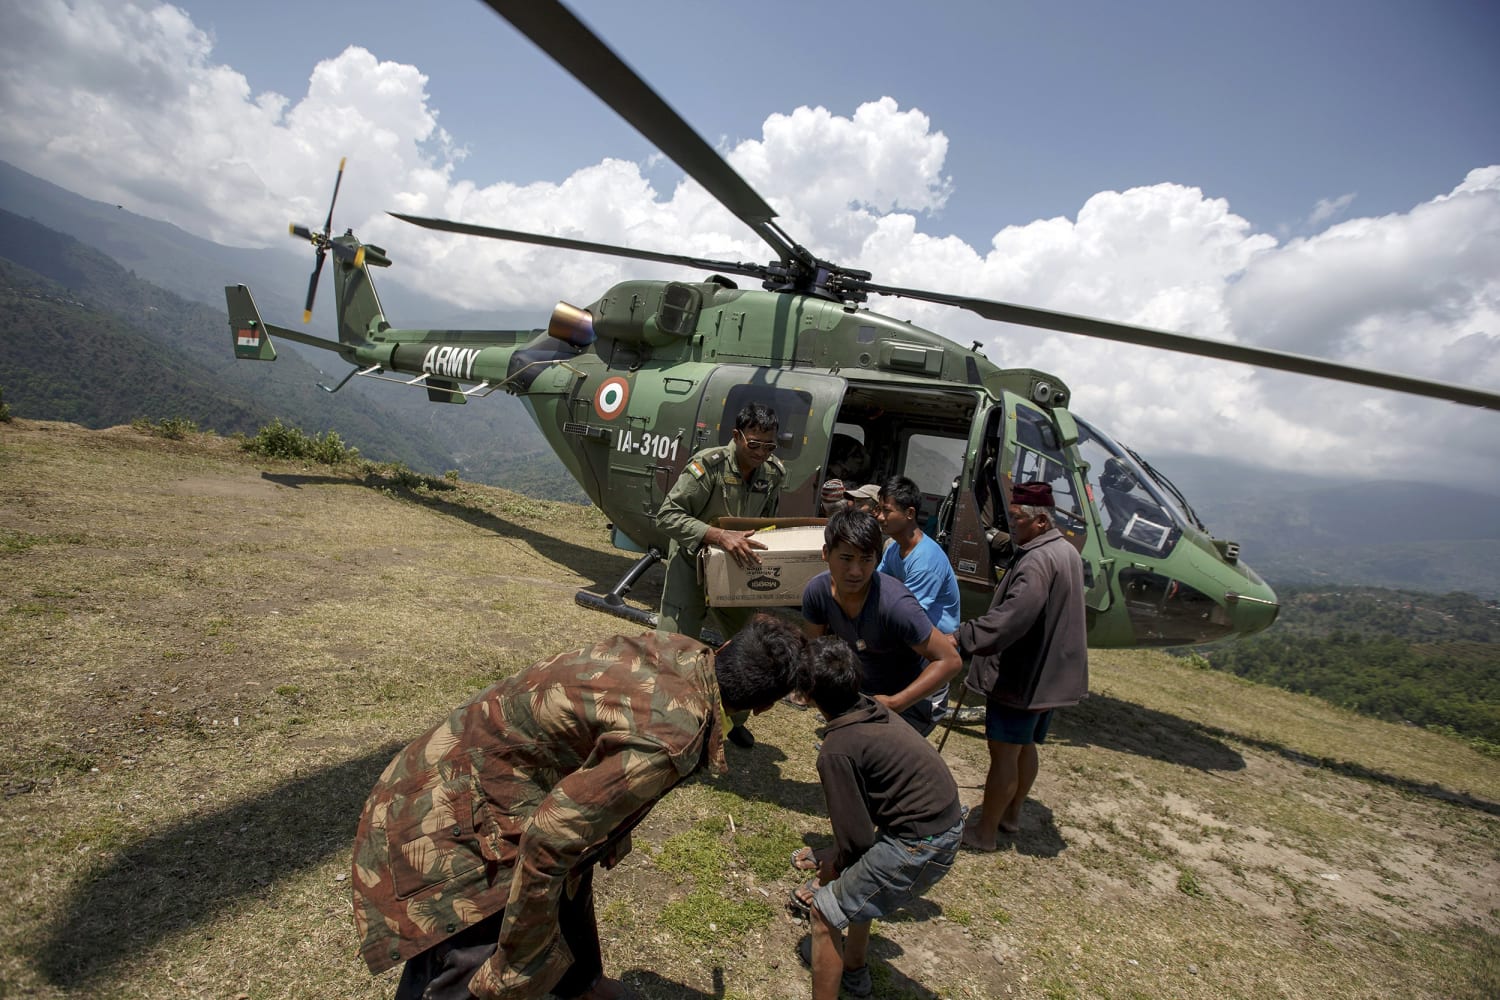 Nepal Earthquake: Aid Workers Warn Of Desperate Chopper Shortage - NBC News